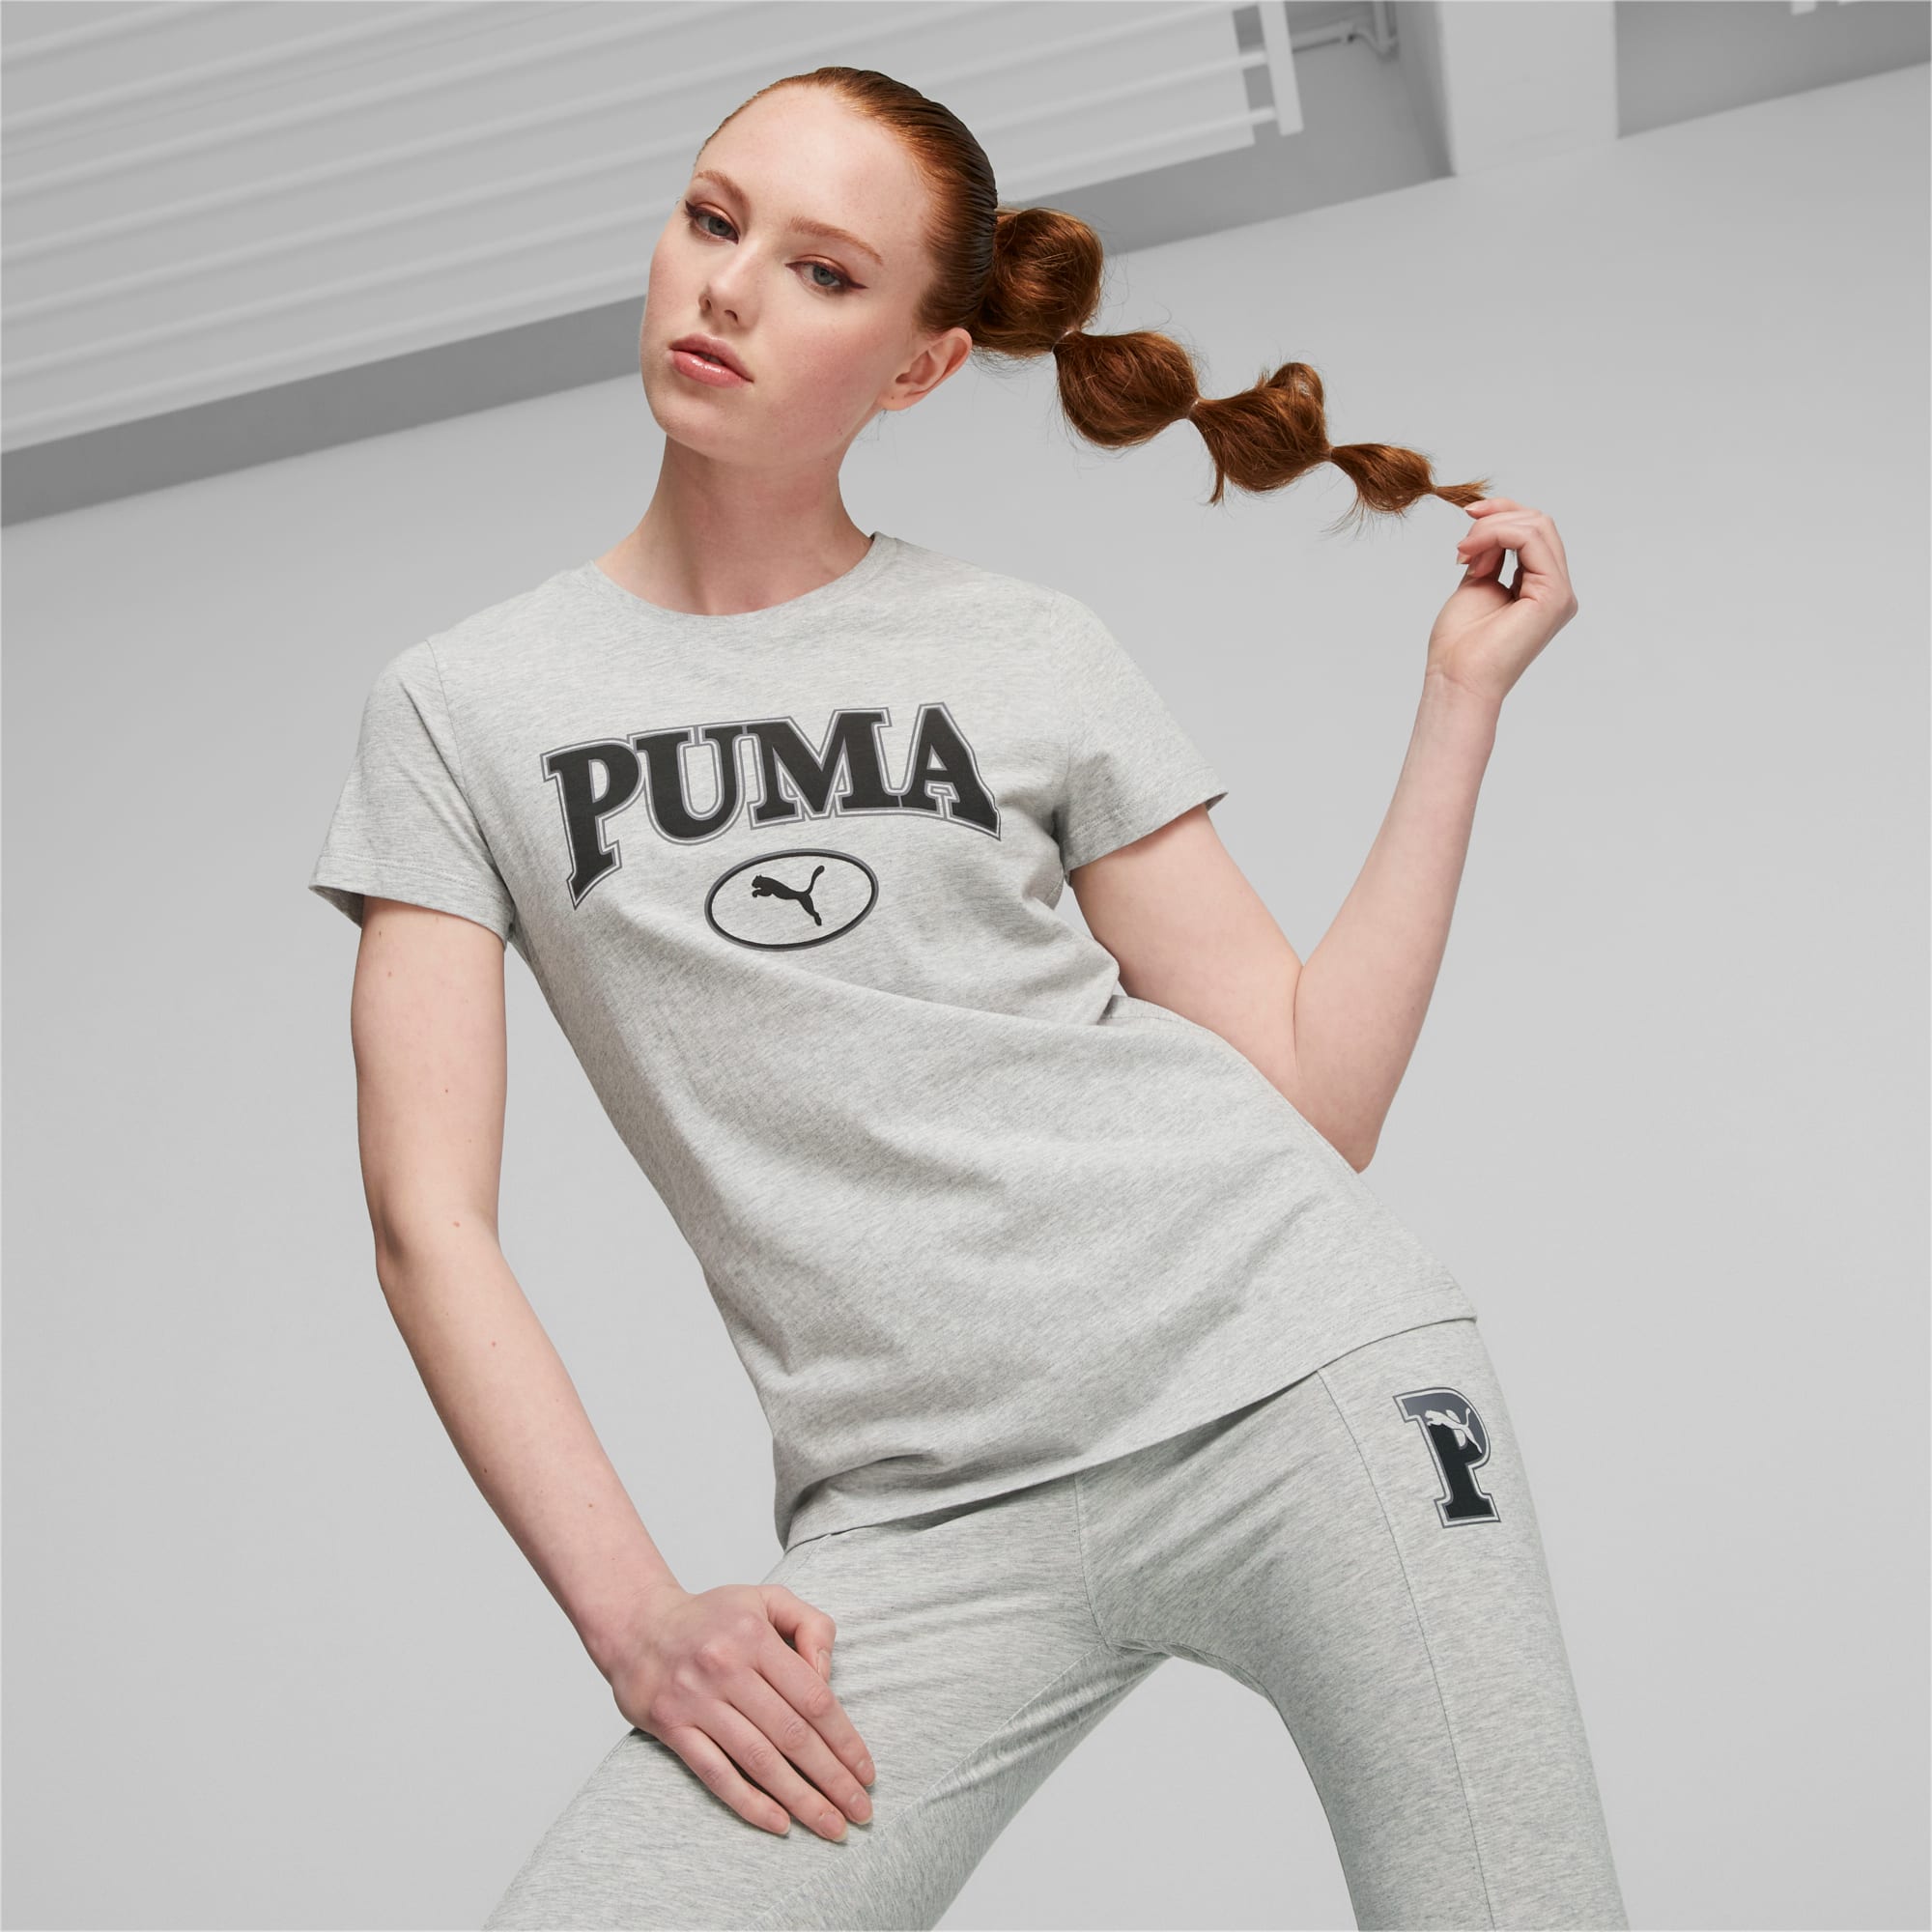 PUMA SQUAD Women's Graphic Tee | | PUMA